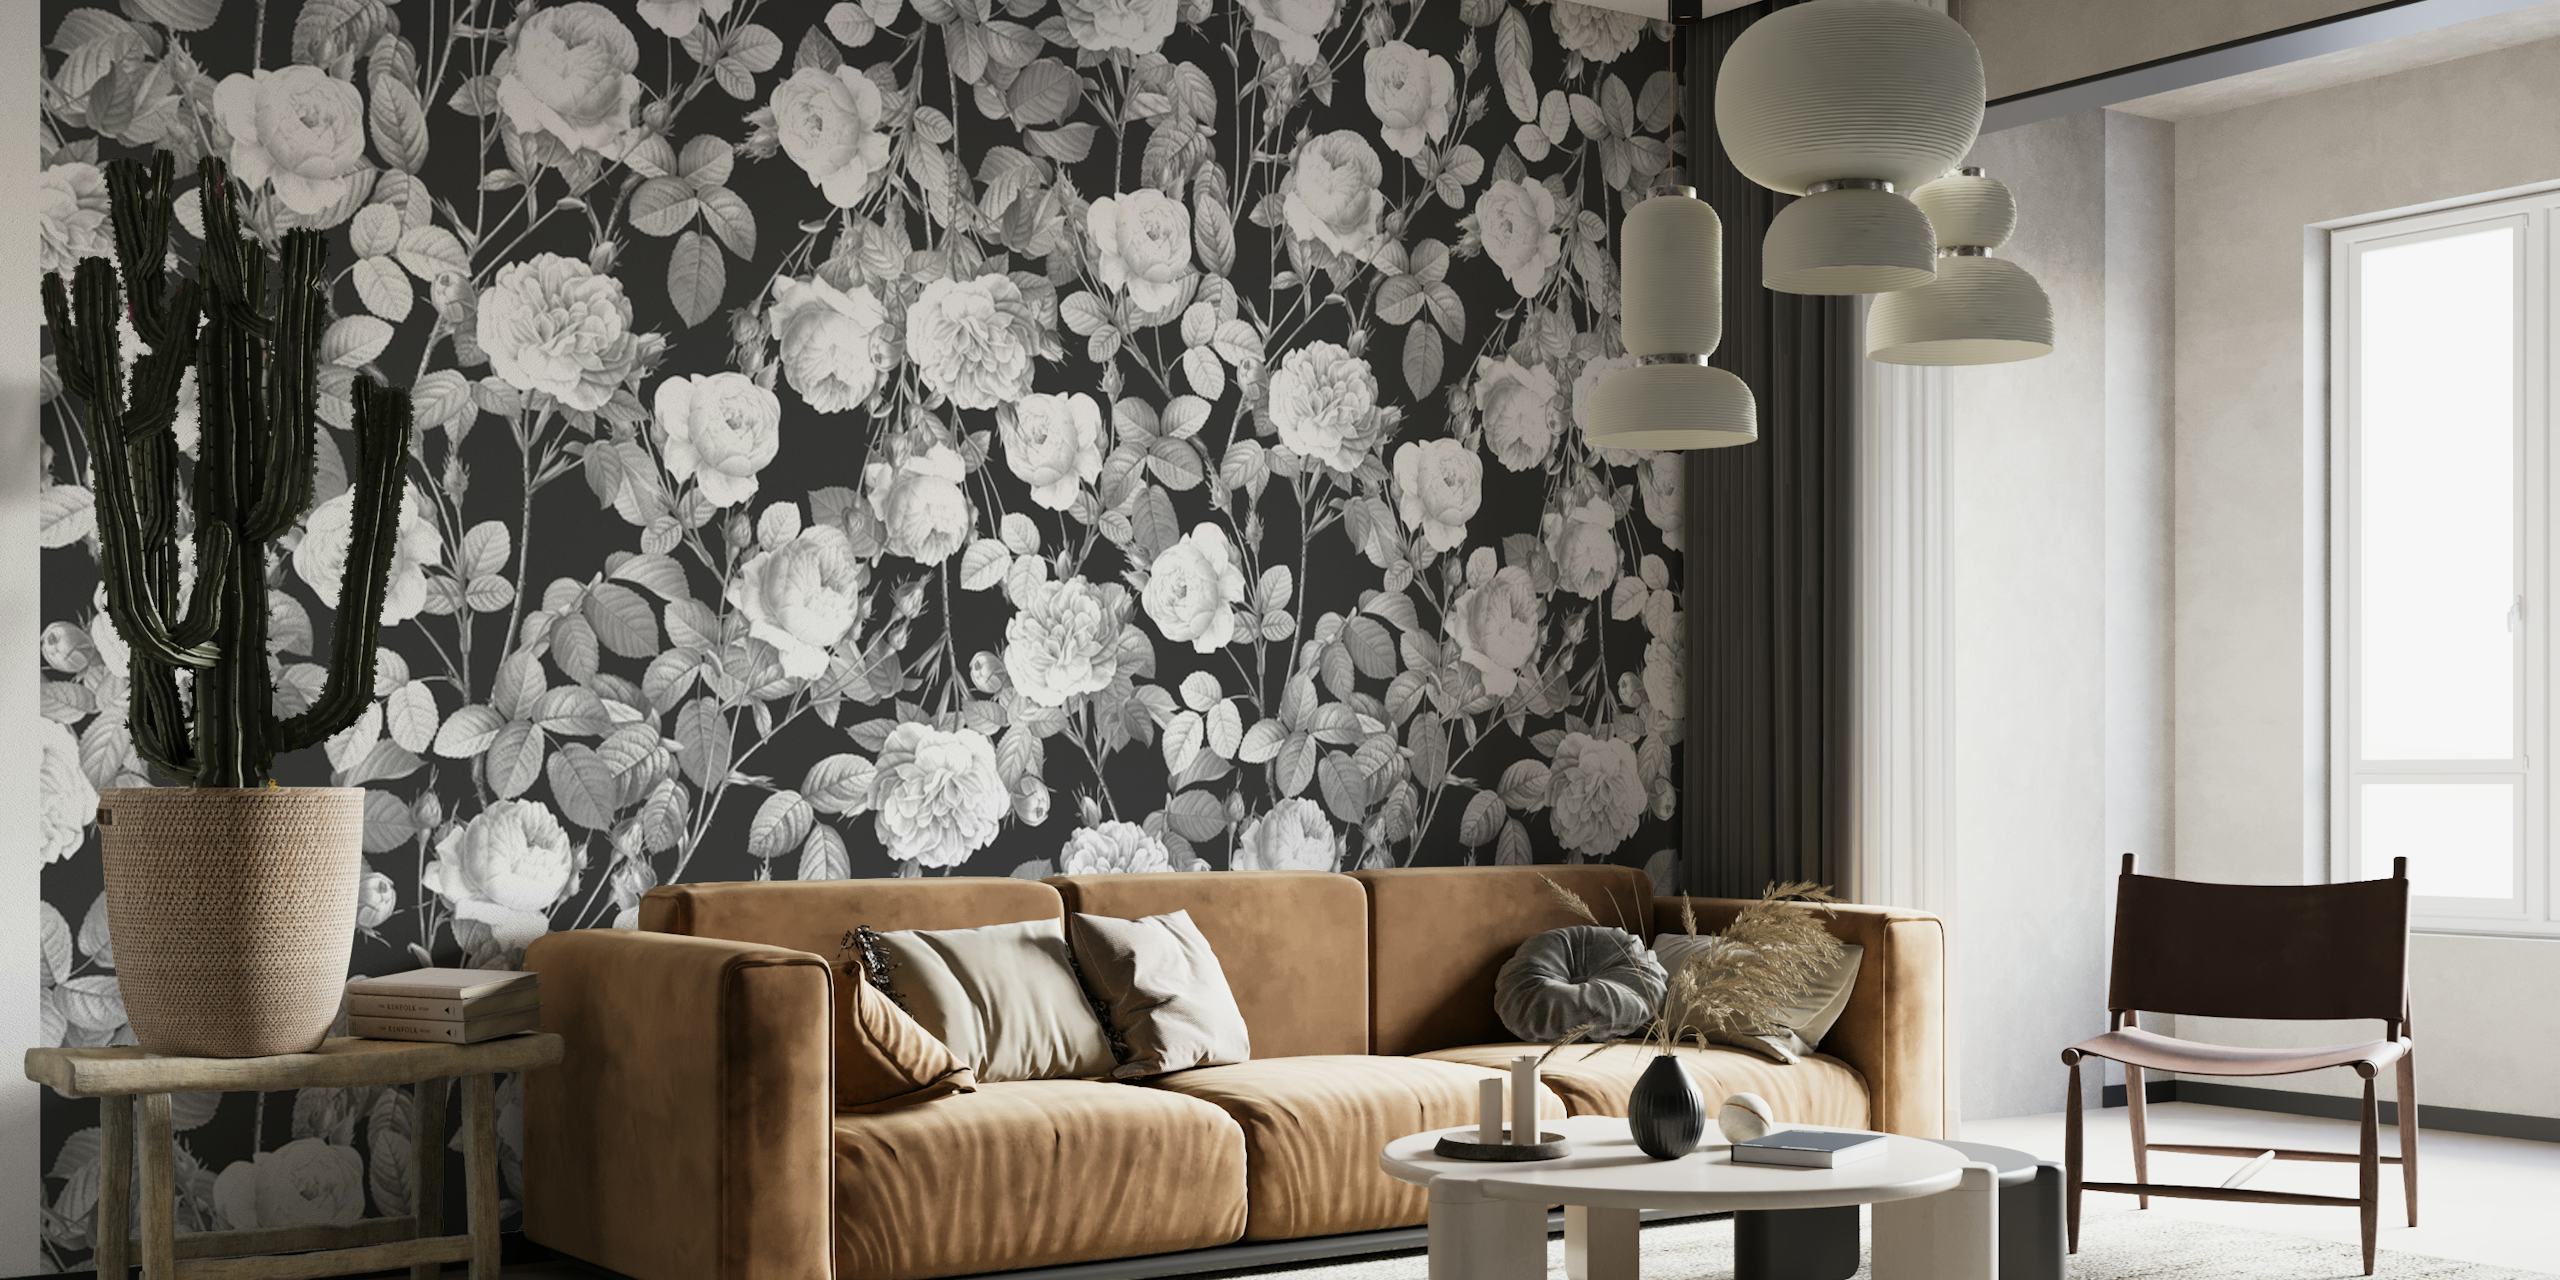 Stunning wallpaper showcasing white roses against a black background